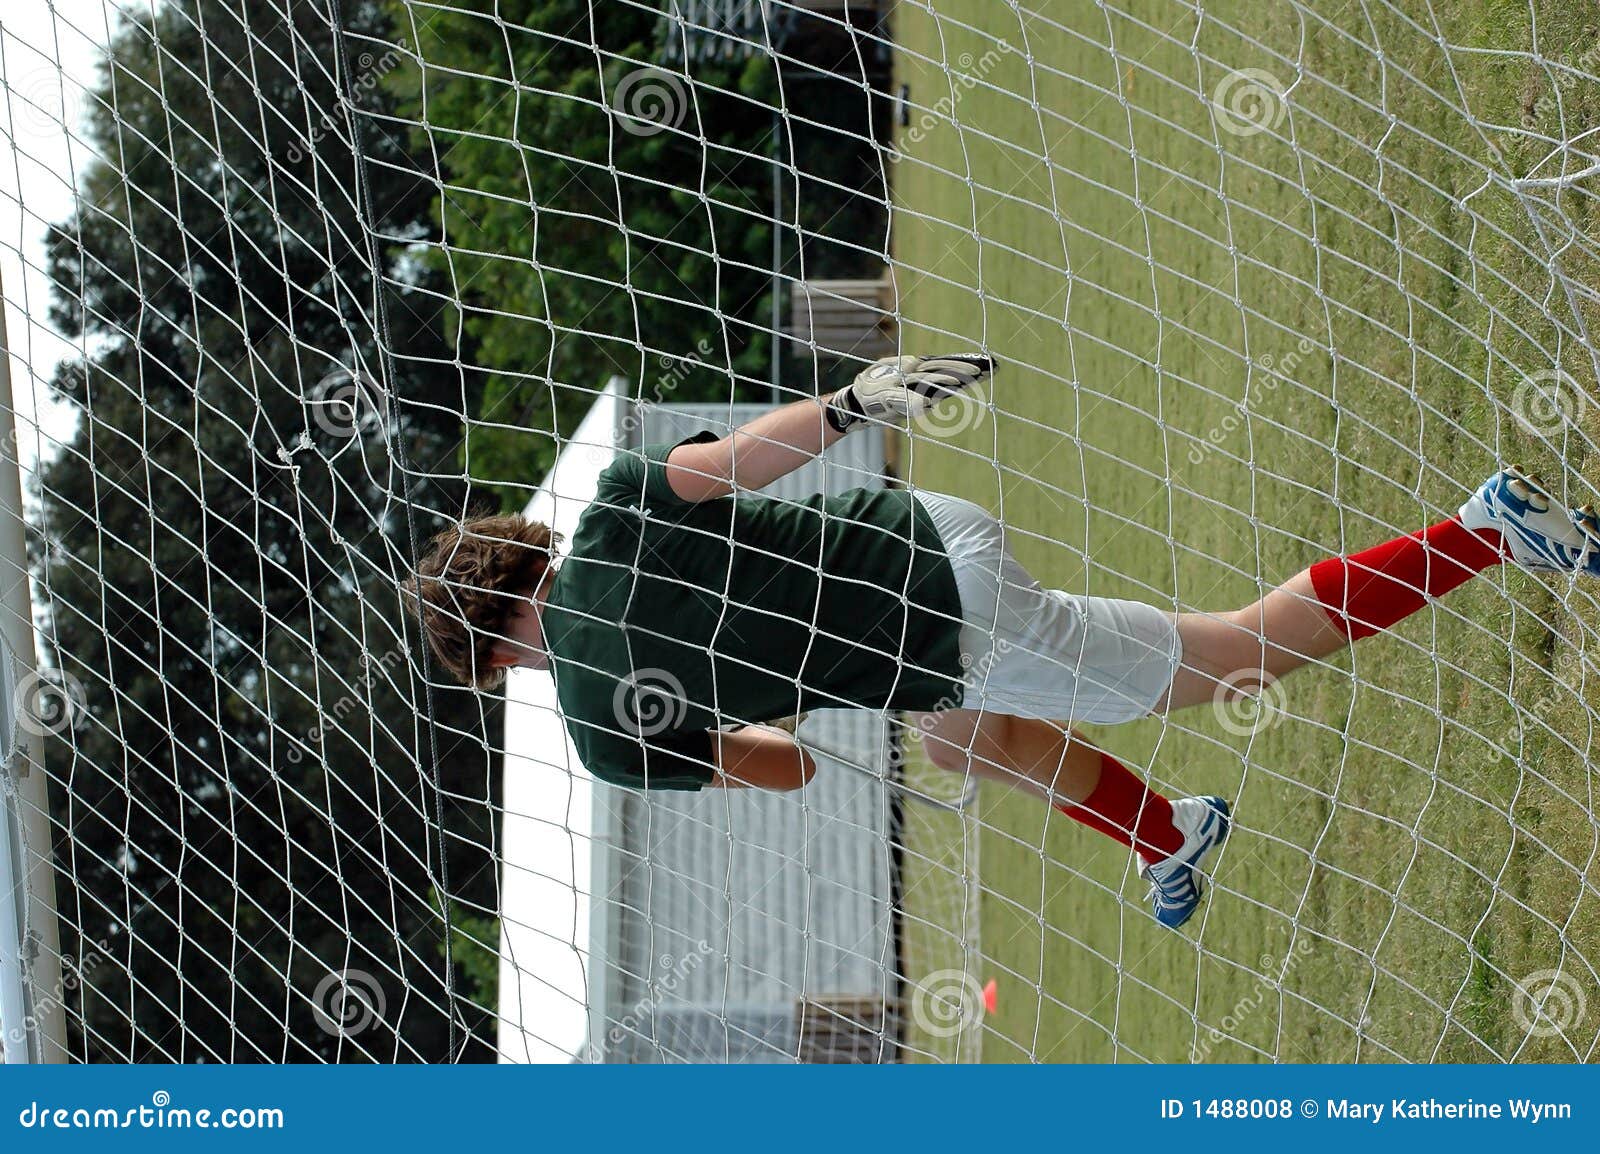 Soccer Goalie Picture. Image: 1488008